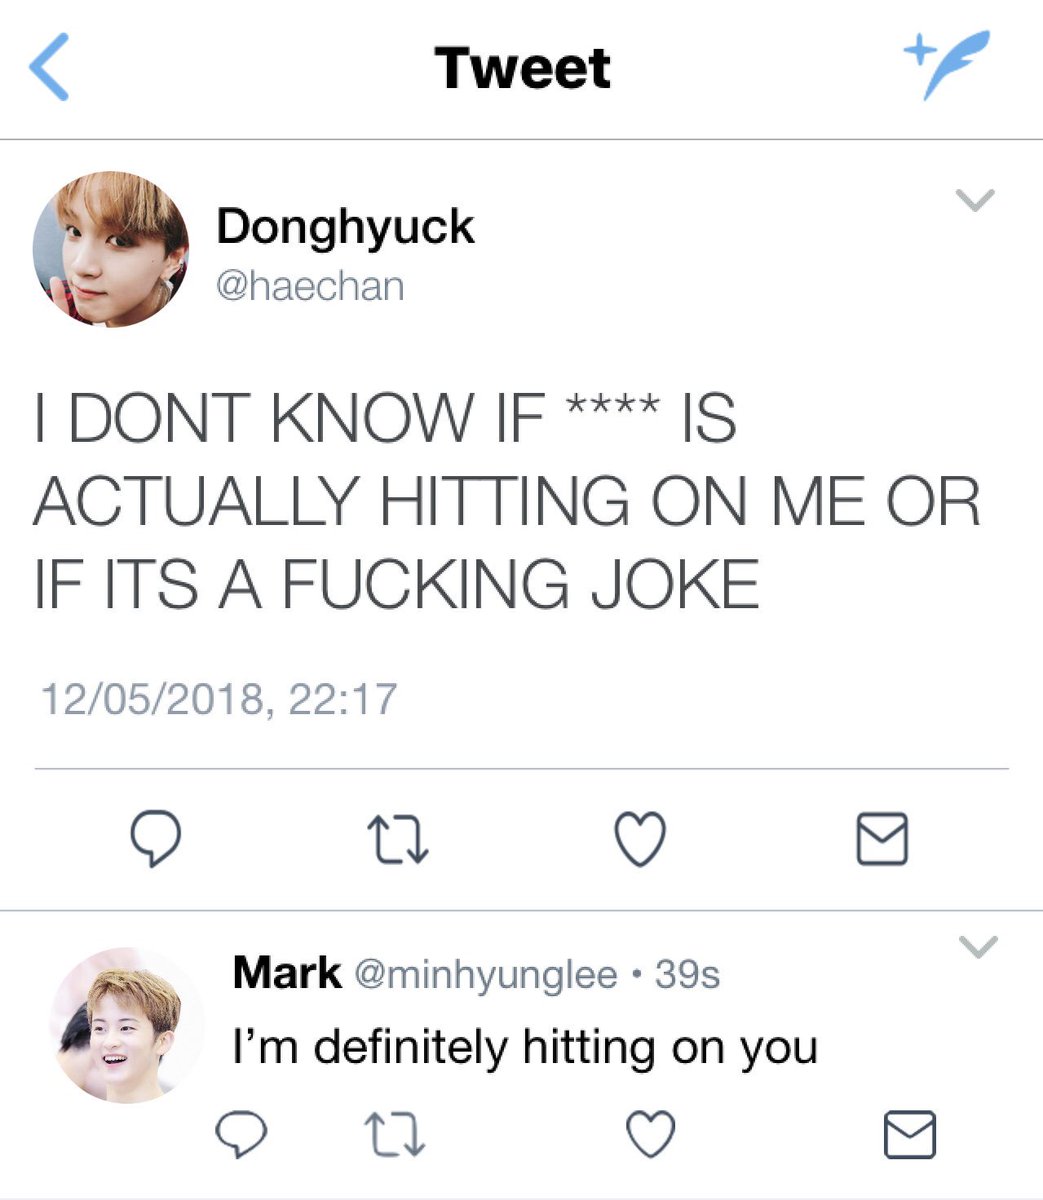 donghyuck gets hit on